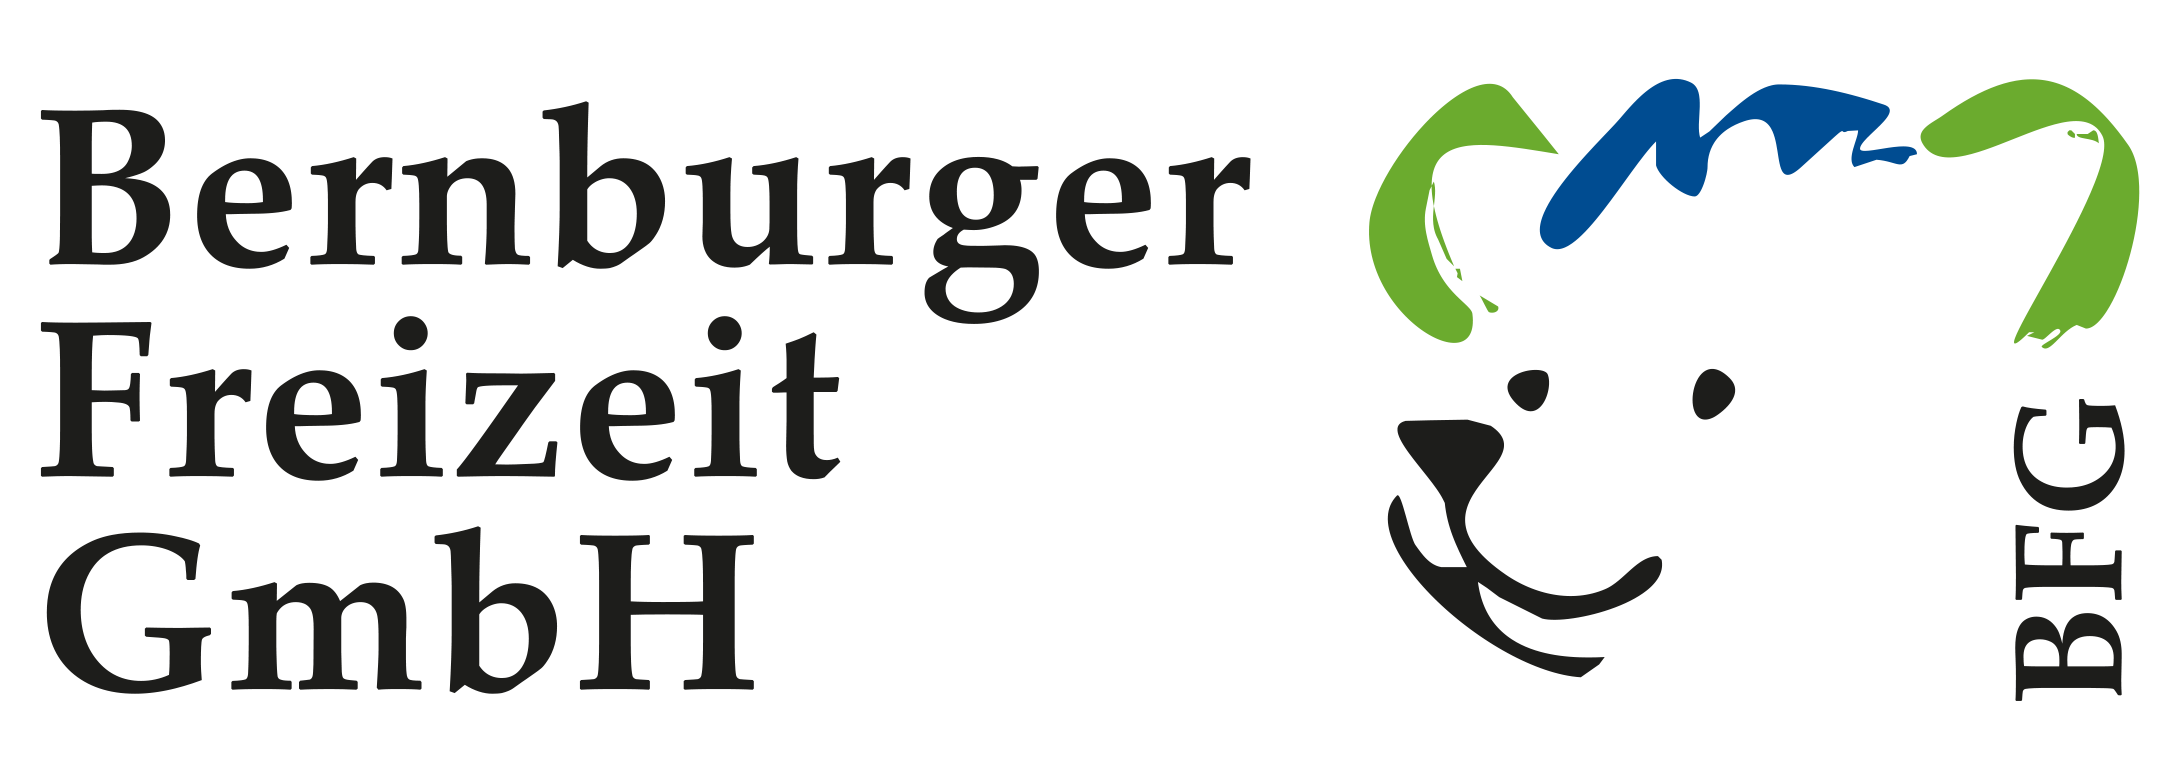 Bernburger Freizeit GmbH Logo